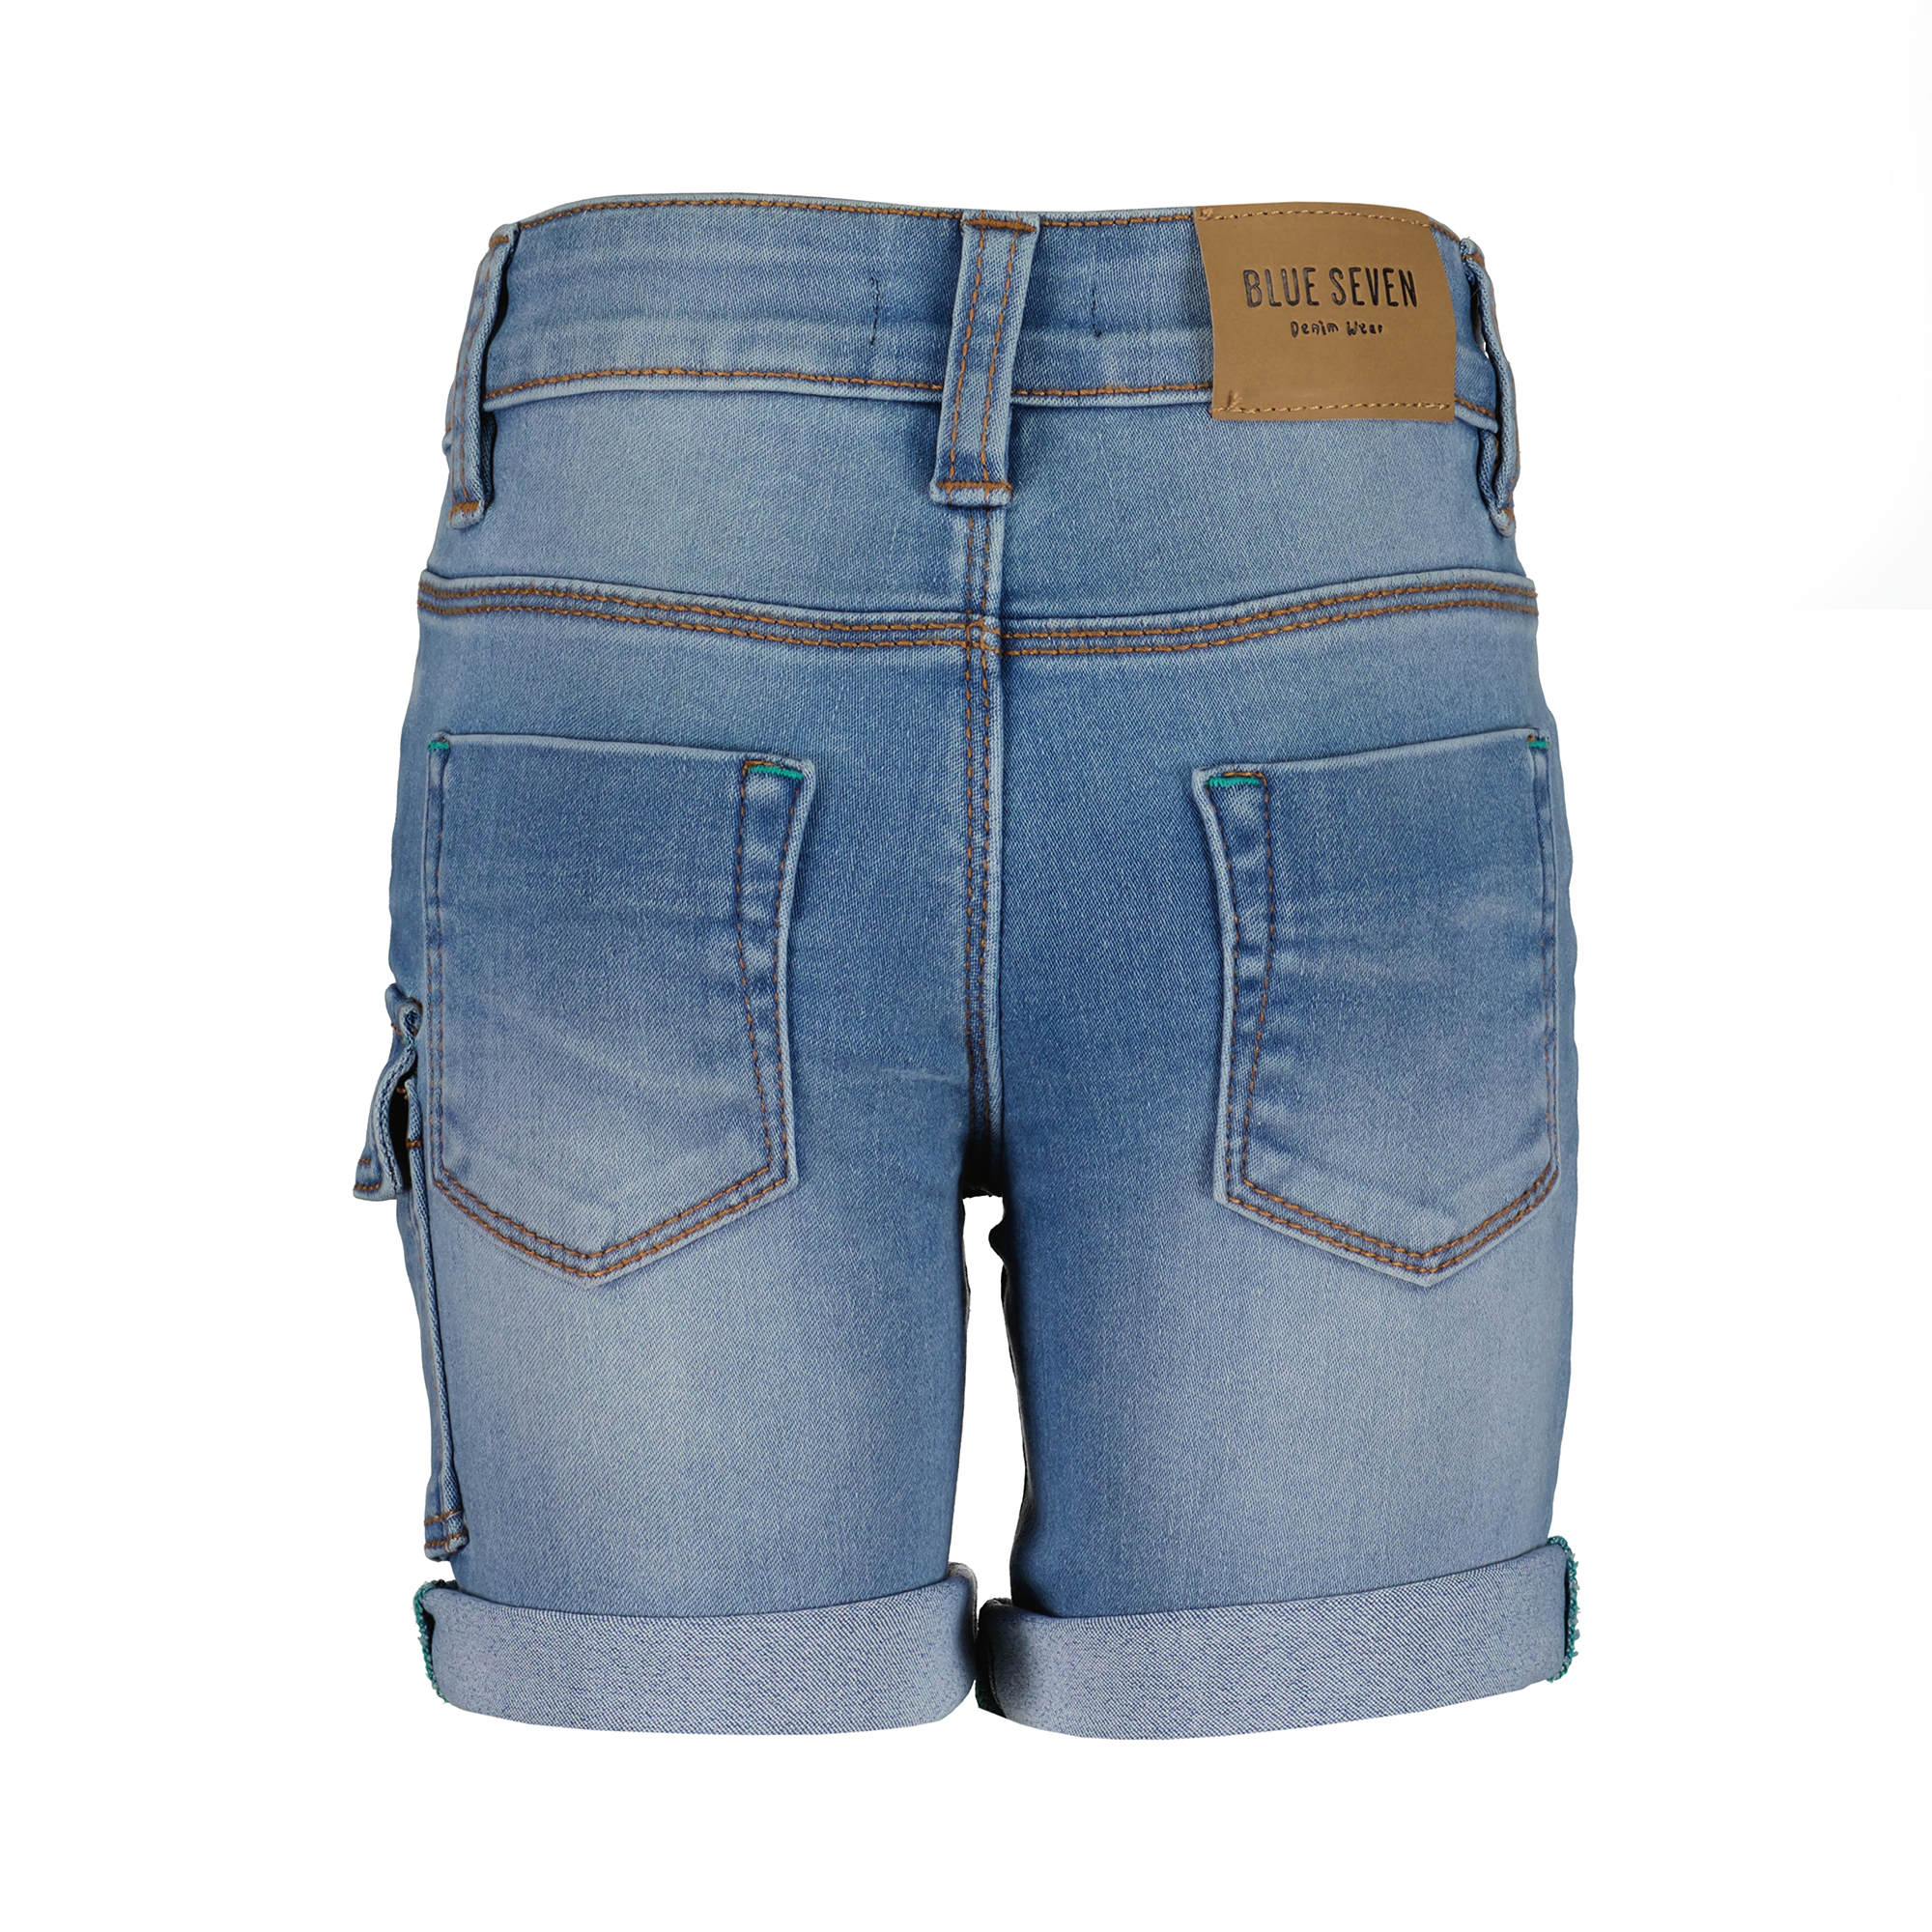 Jeans-Shorts Marine blue seven Blau M2000586241505 2